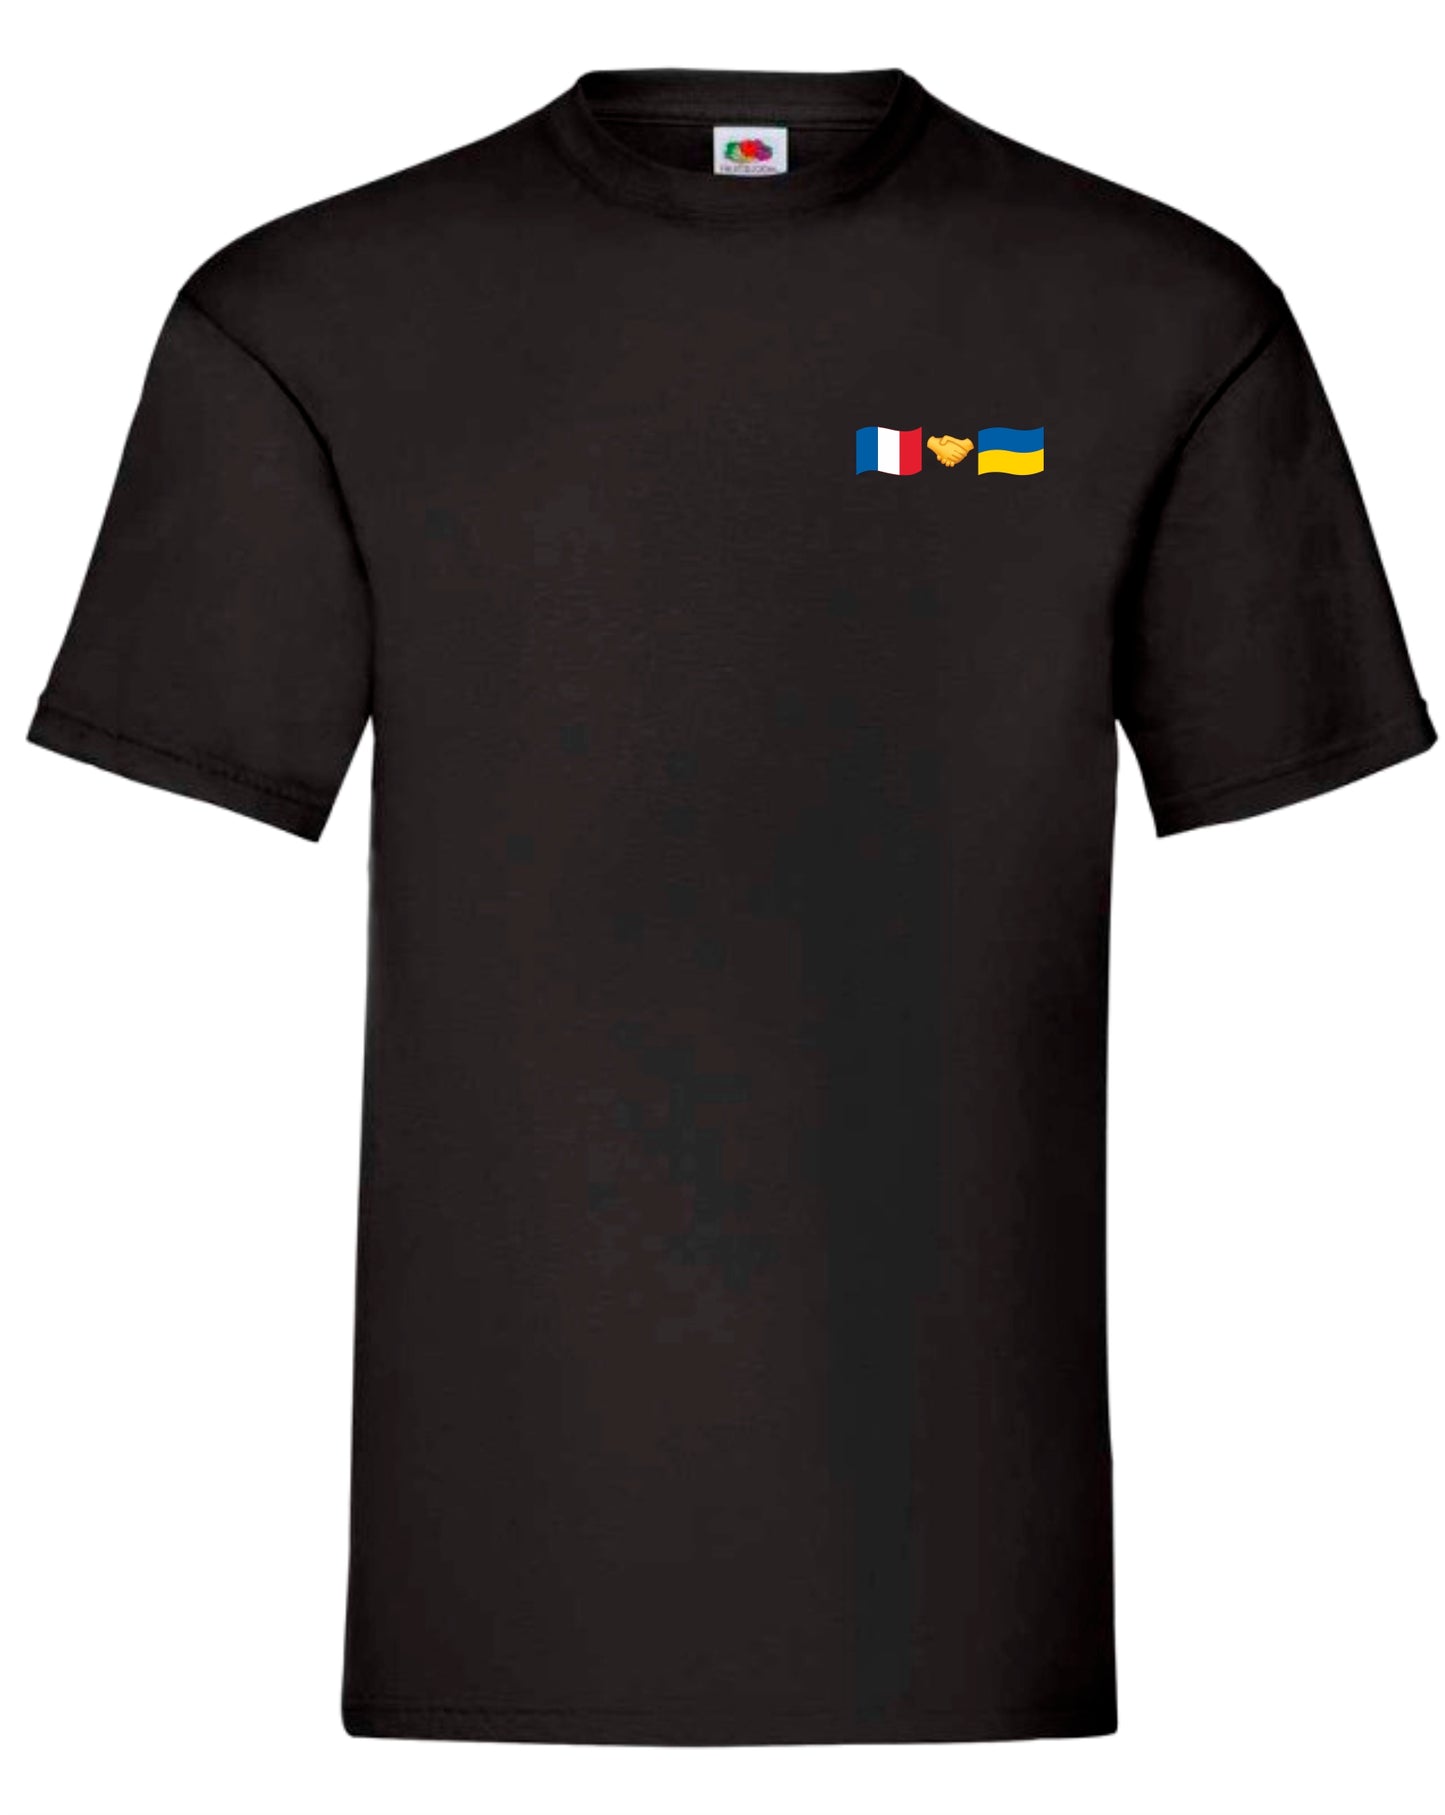 Т-shirt France + Ukraine (small logo)